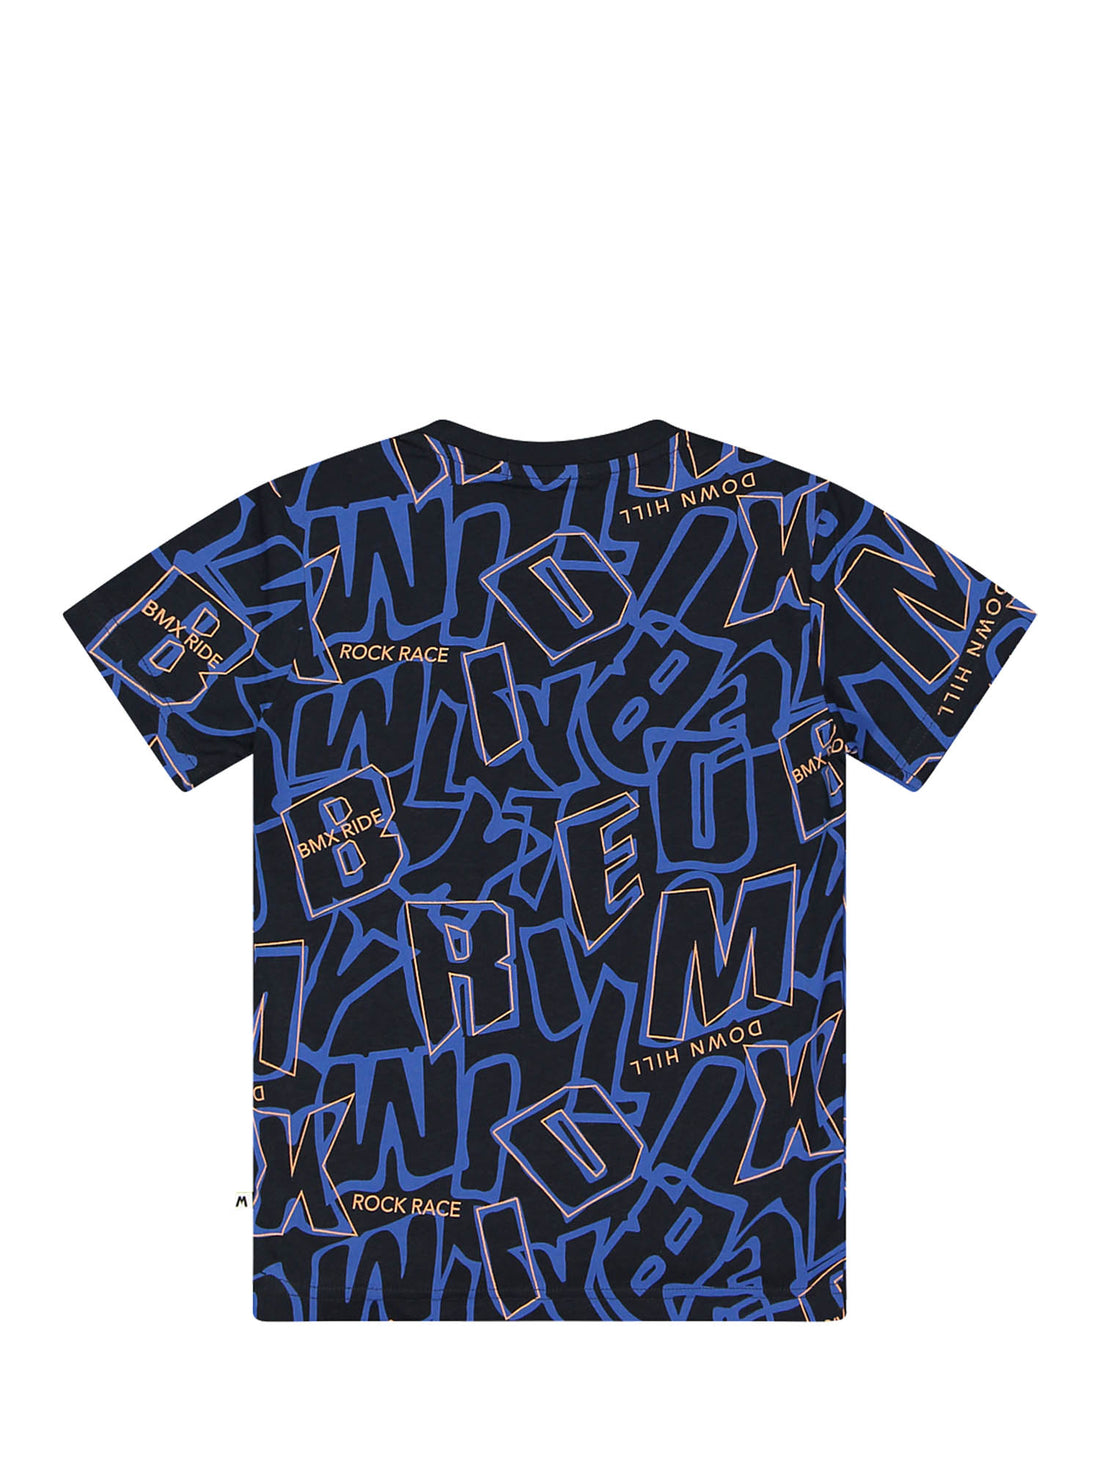 T-shirt Blu Melby